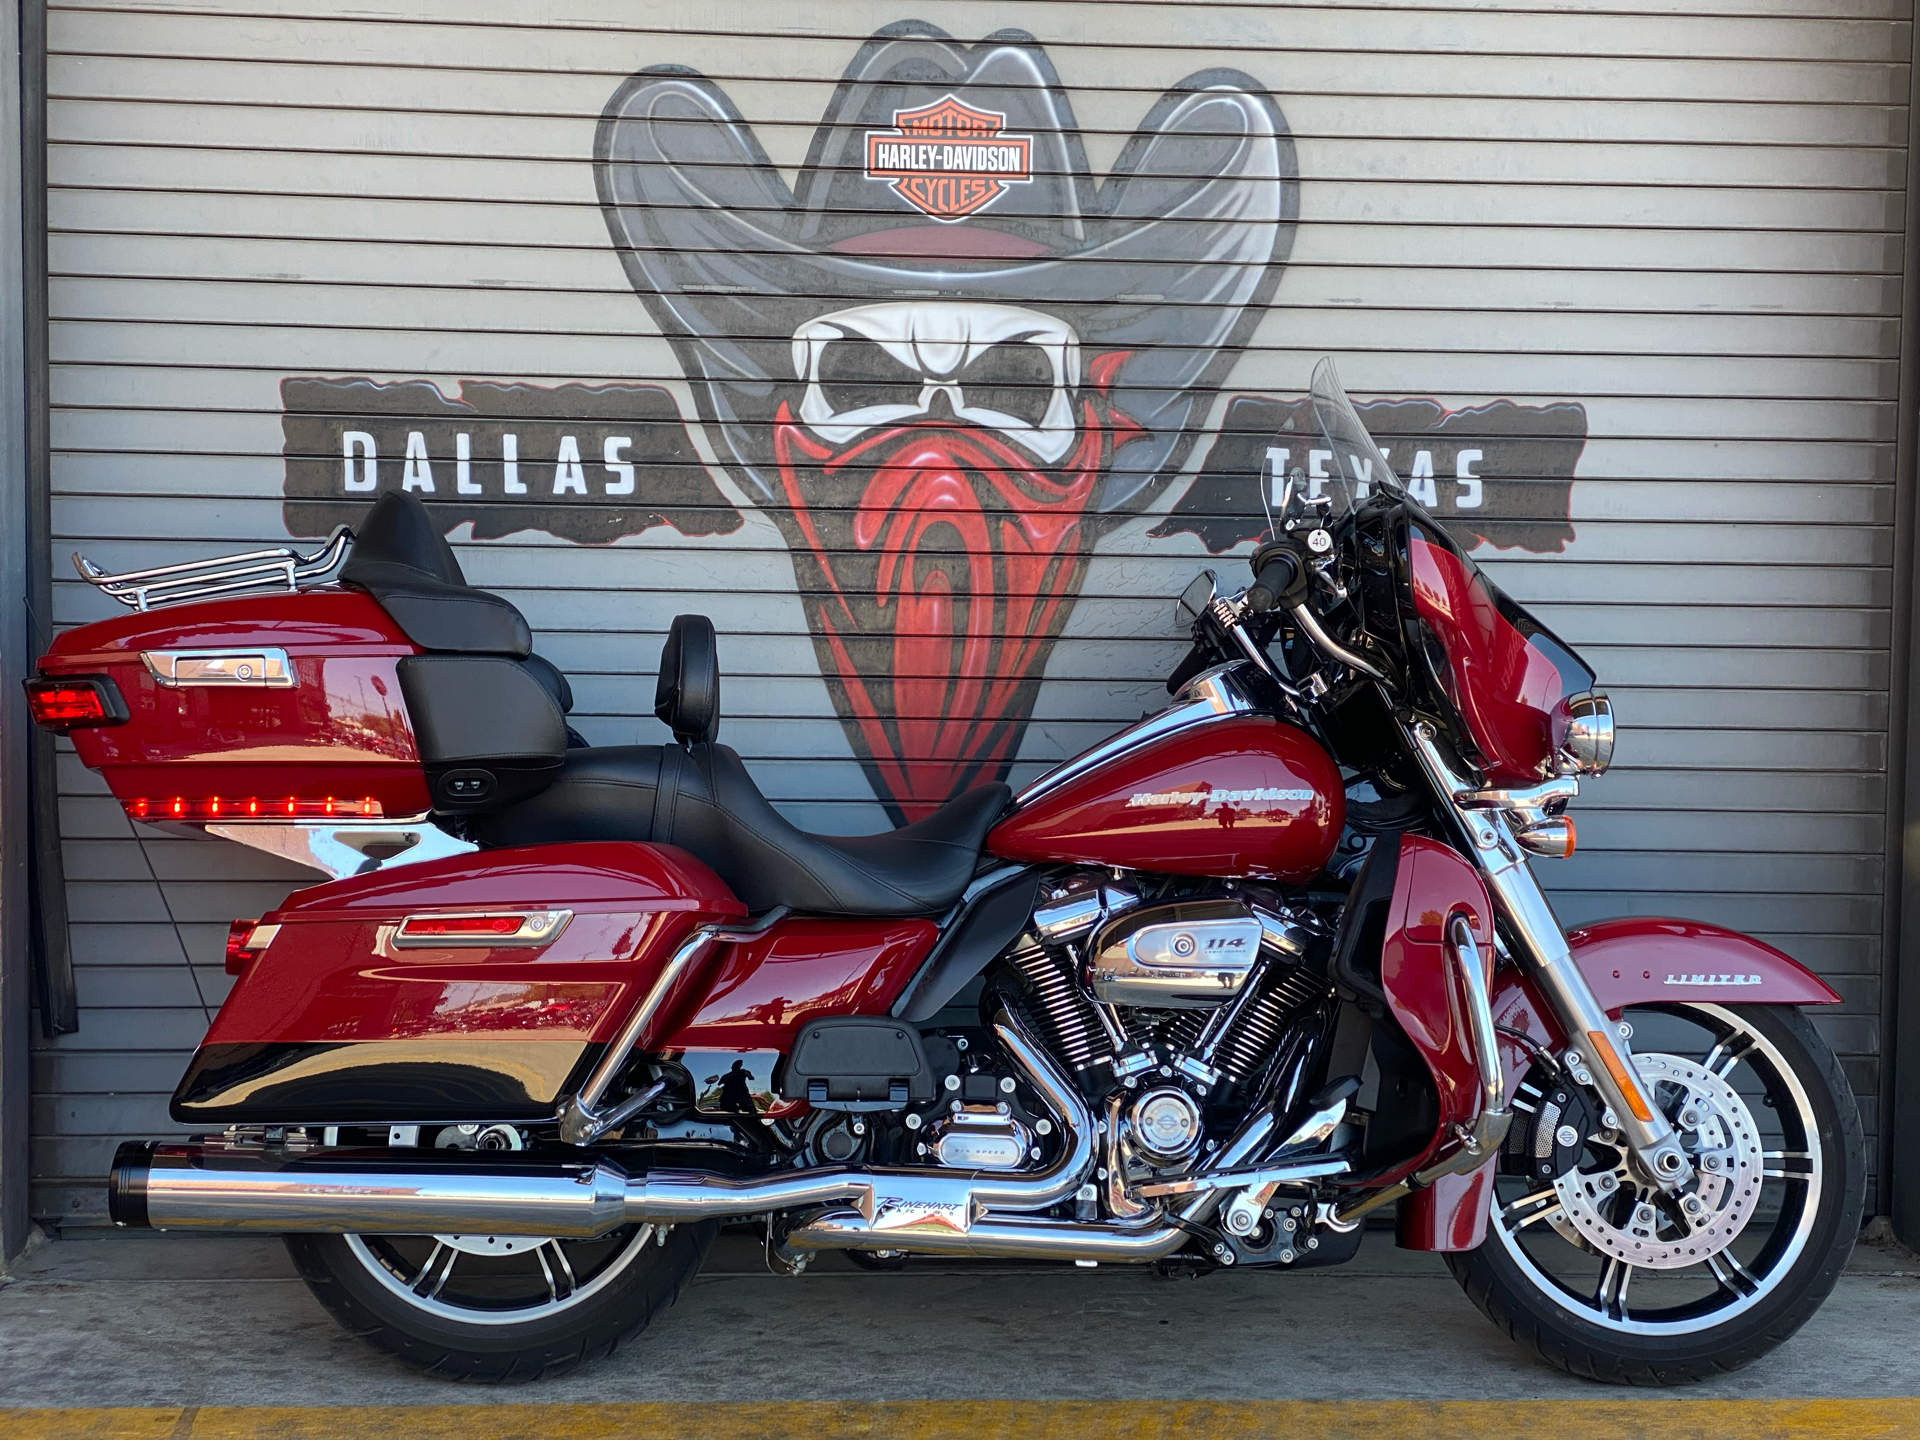 2021 Harley-Davidson Ultra Limited in Carrollton, Texas - Photo 3